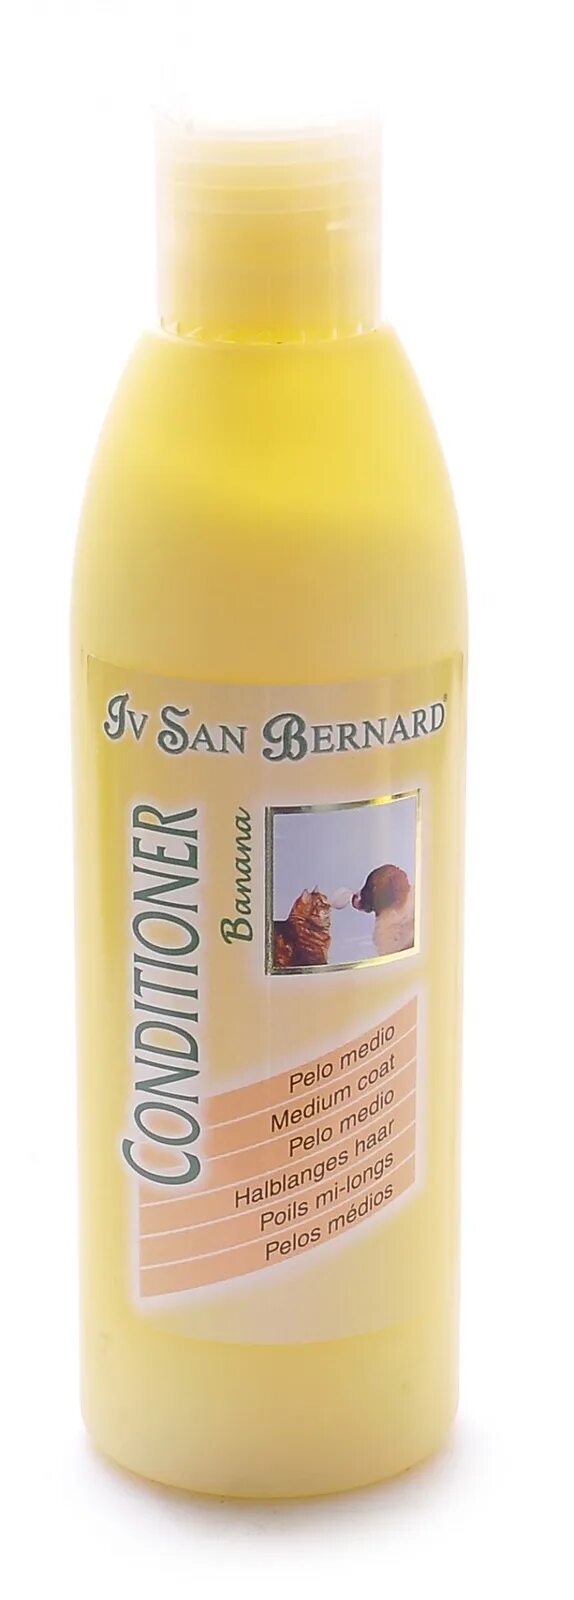 San bernard для собак. IV San Bernard кондиционер. IV San Bernard шампунь для собак банан. Ив сен Бернард банан шампунь. Ив Сан Бернард банан кондиционер.